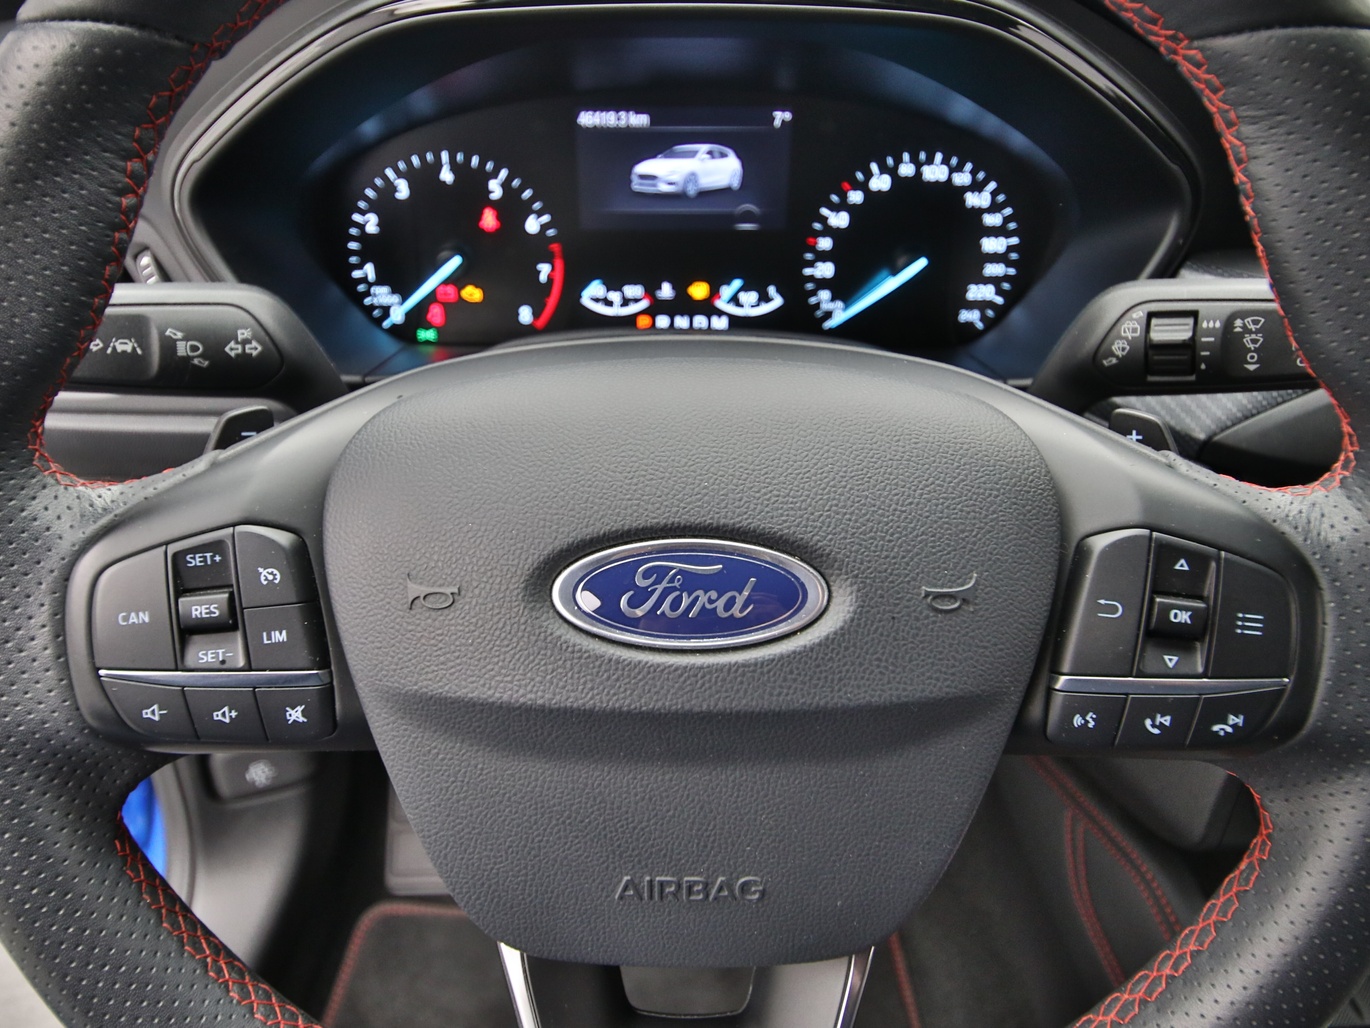  Ford Focus ST-Line 150PS Aut. / Design-P. / Komfort-P. in Dynamic Blau 